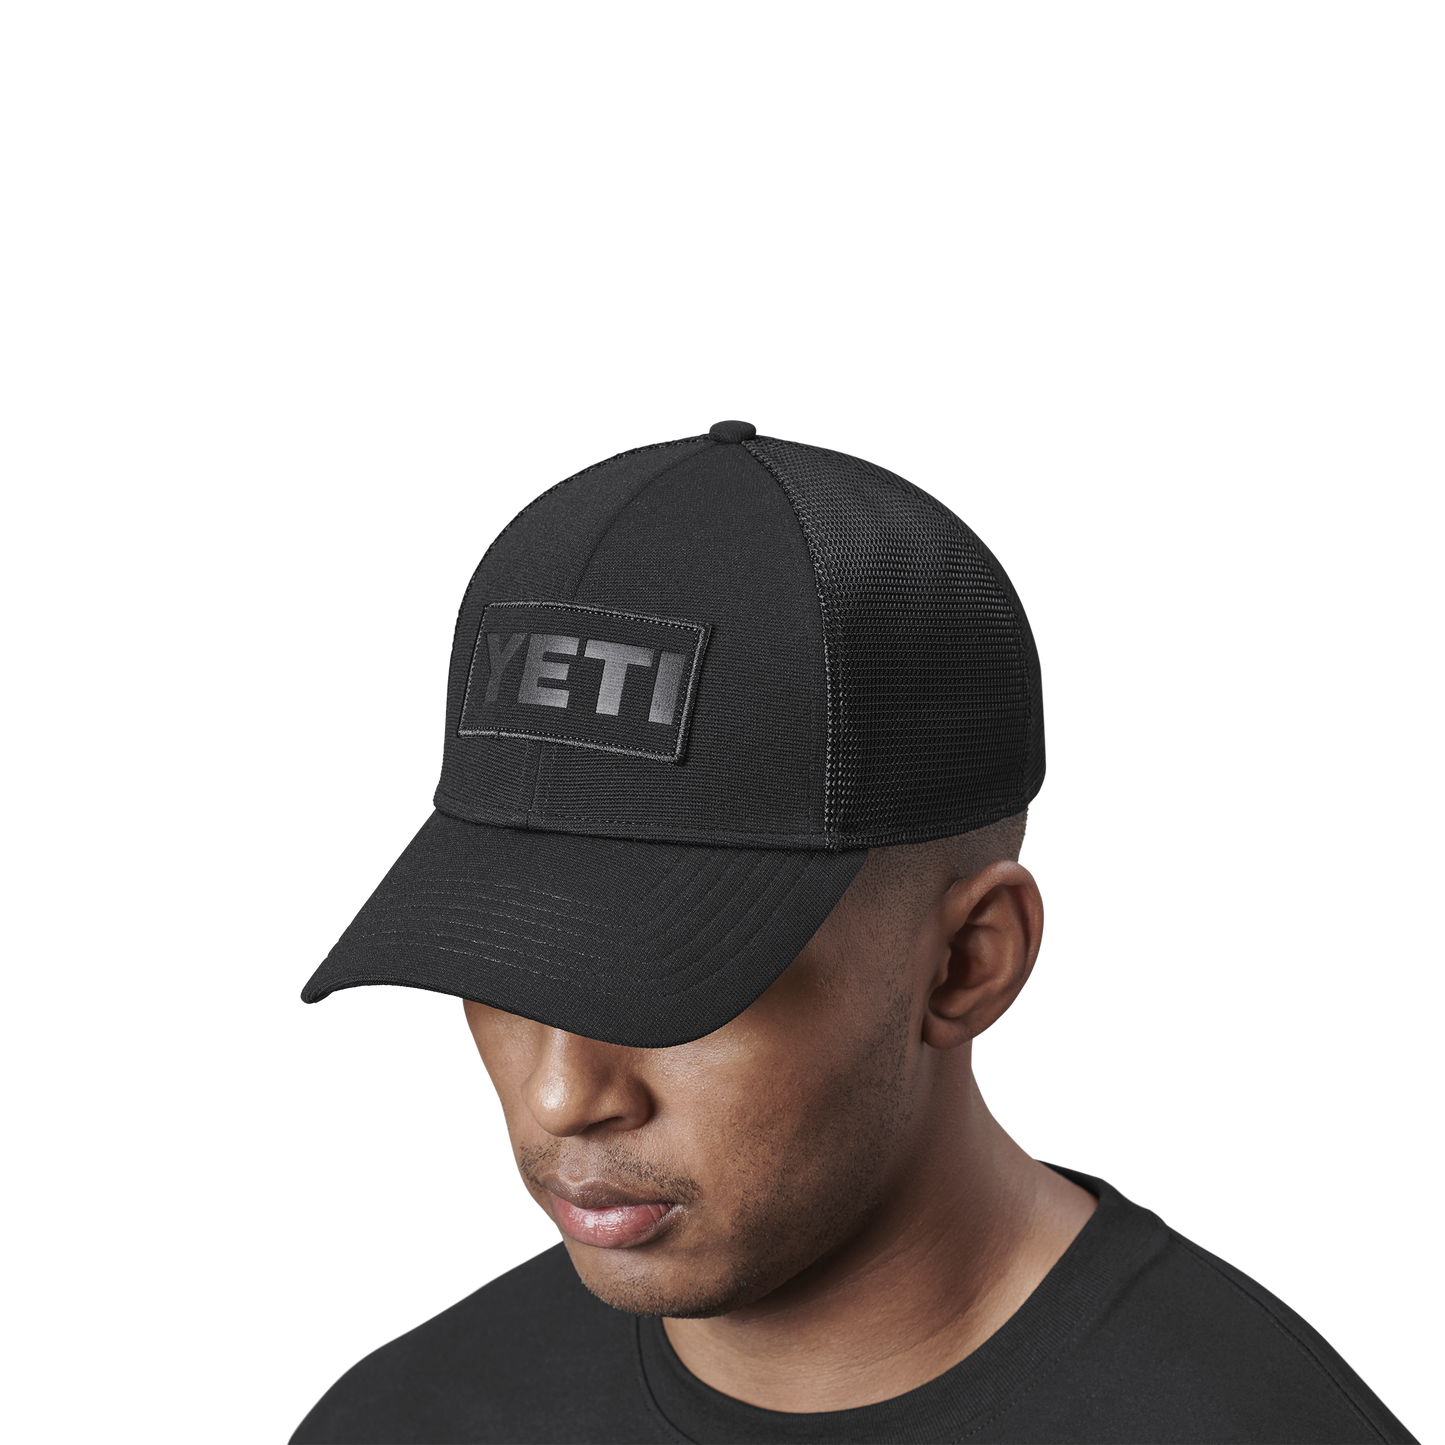 YETI Core Patch Trucker Hat Black on Black Black/Black